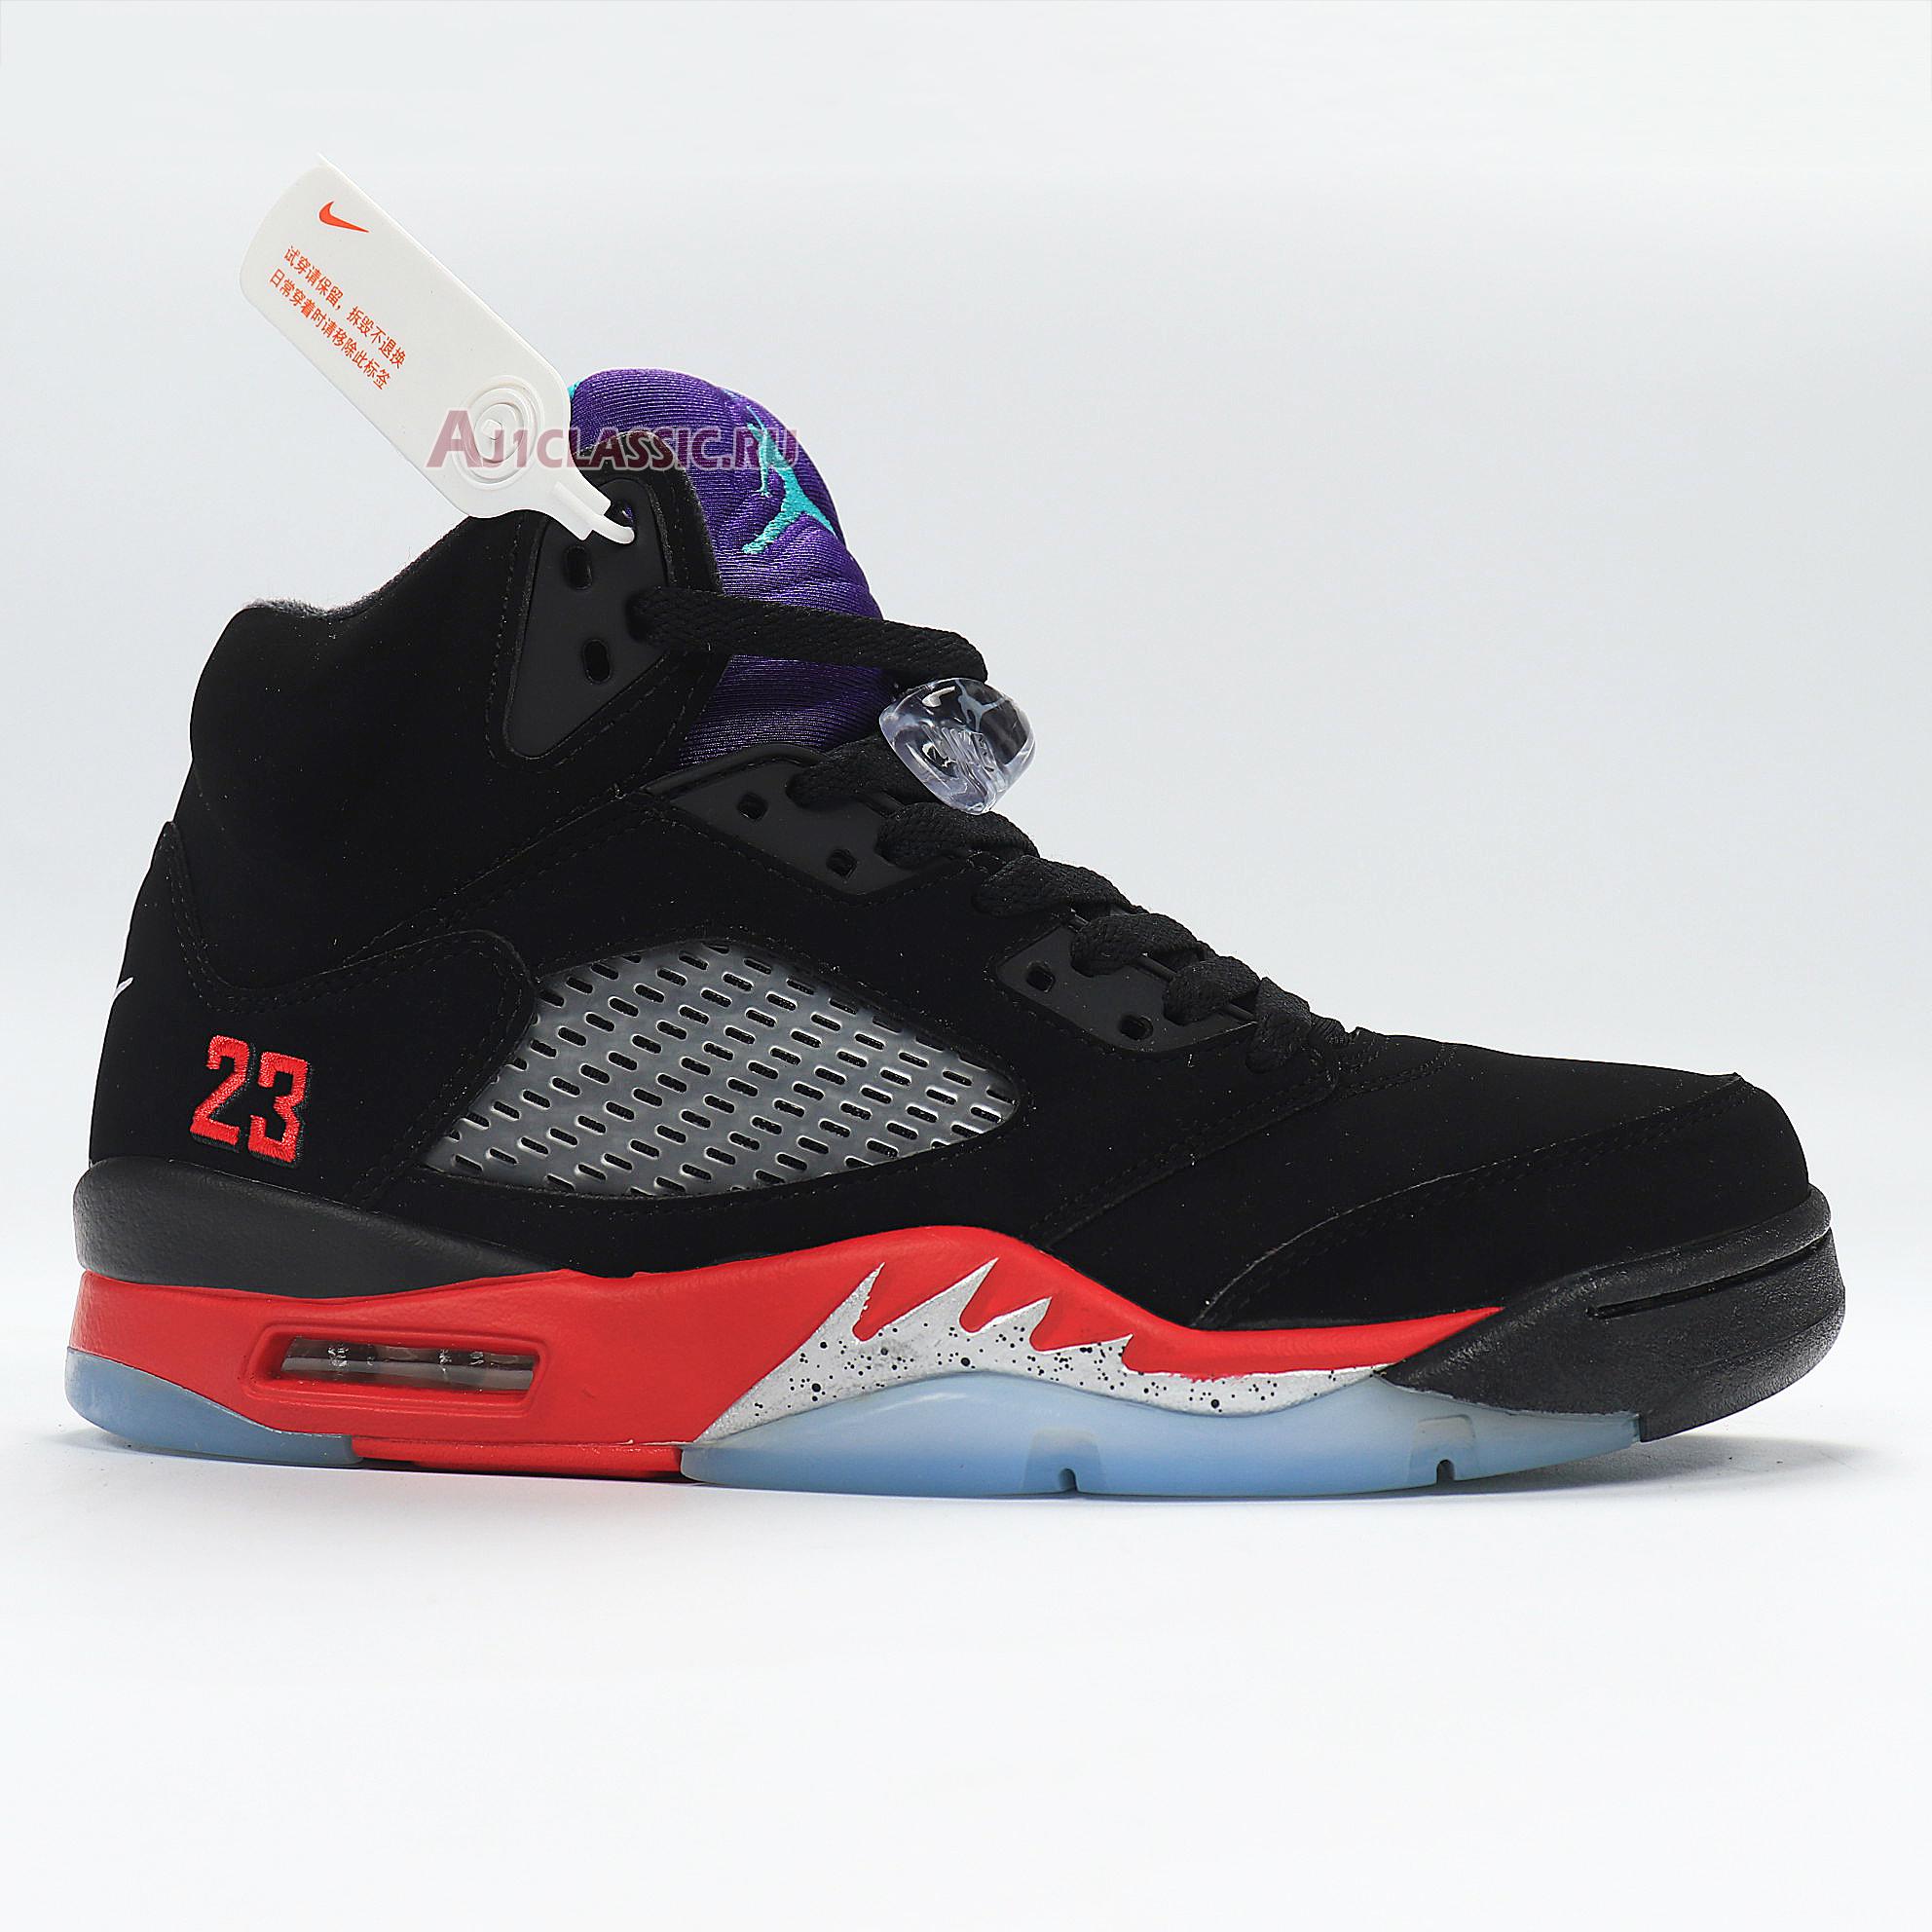 Air Jordan 5 Retro Top 3 CZ1786-001 Black/Fire Red/Grape Ice/New Emerald Sneakers